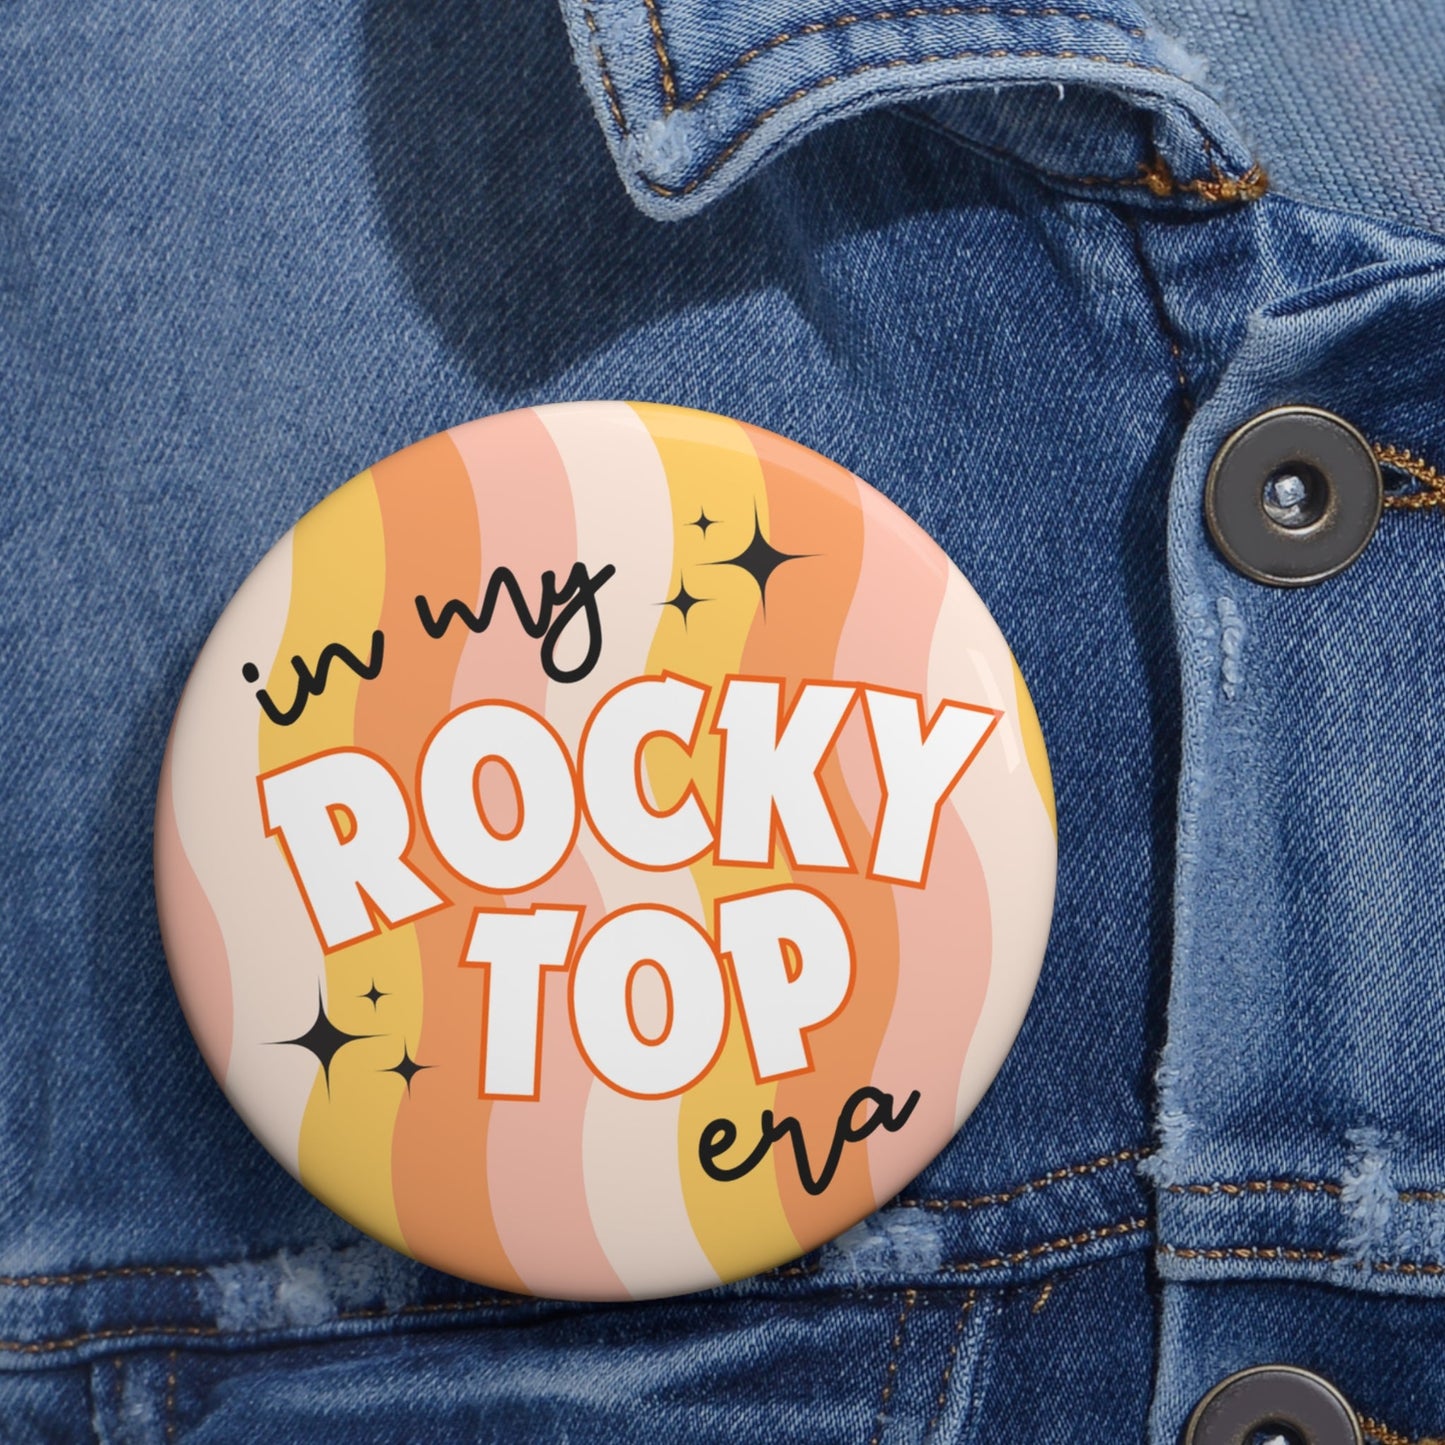 In My Rocky Top Era Gameday Pin